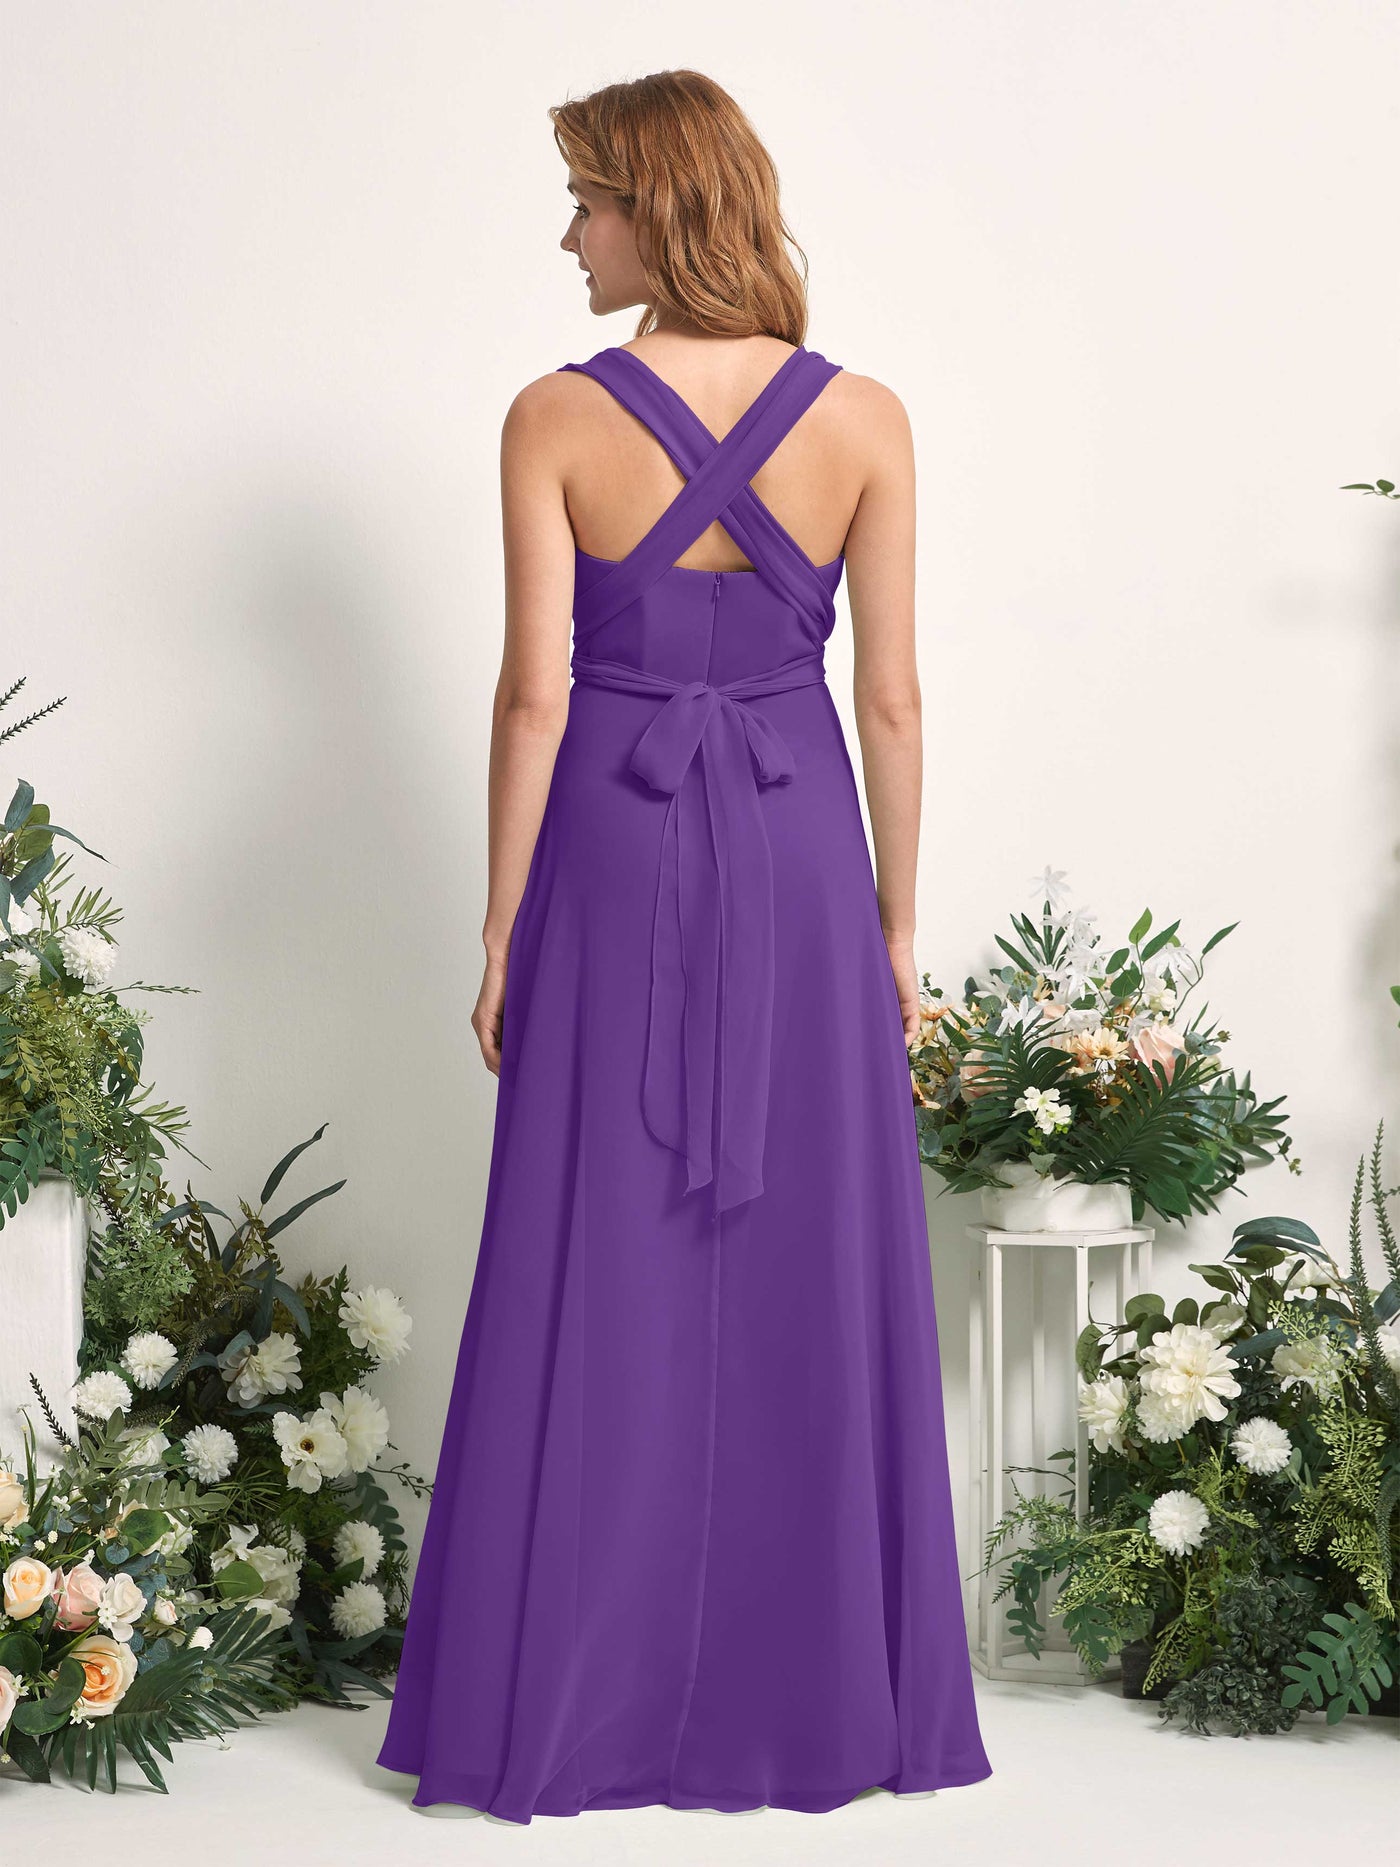 Regency Bridesmaid Dresses Bridesmaid Dress A-line Chiffon Halter Full Length Short Sleeves Wedding Party Dress (81226328)#color_regency